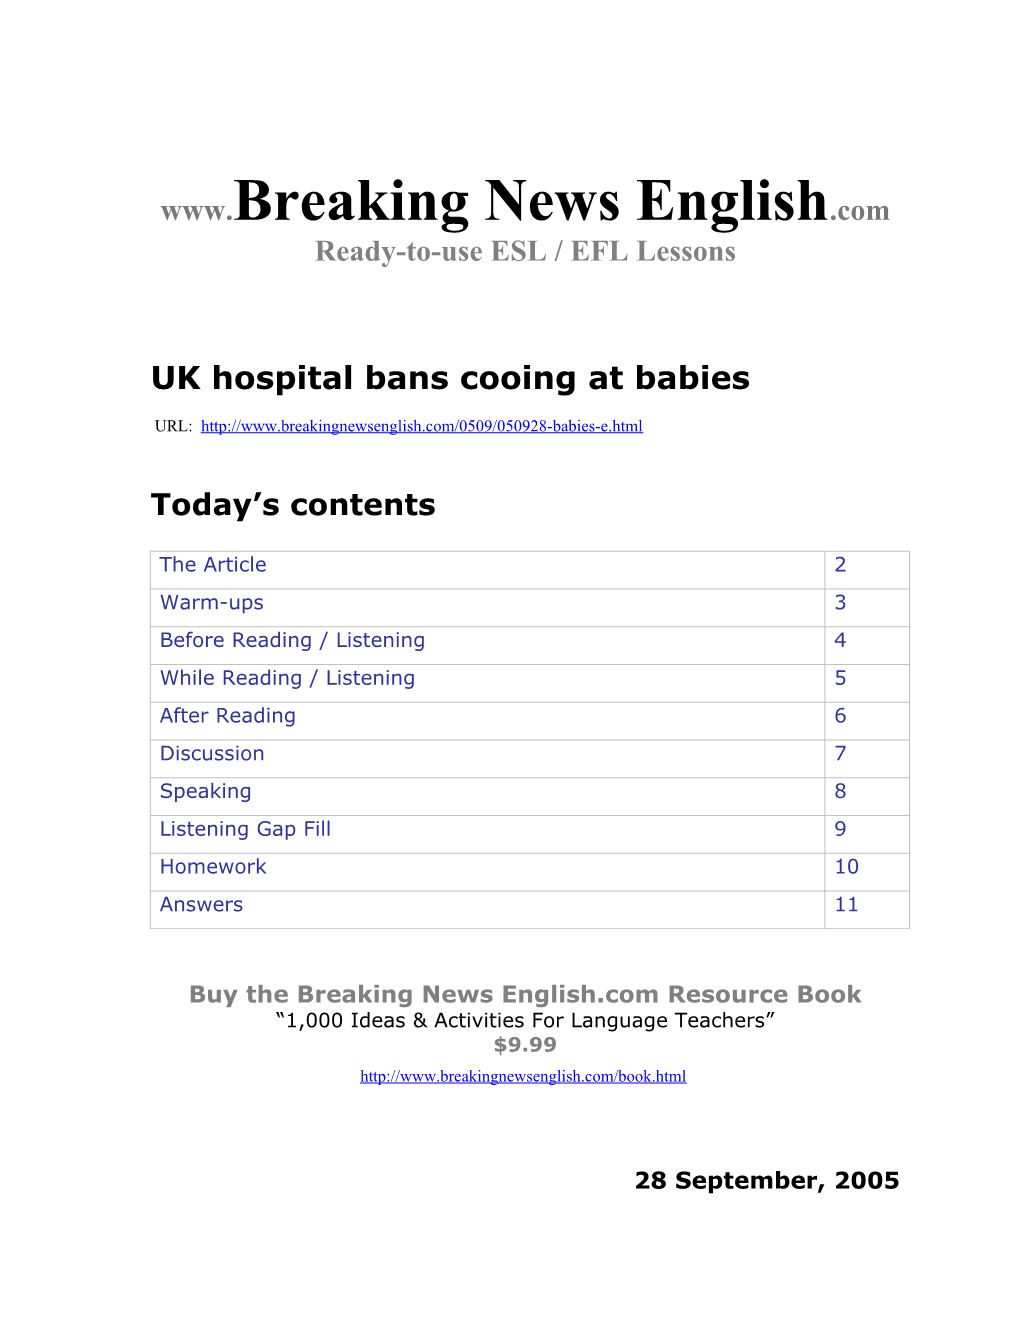 UK Hospital Bans Cooing at Babies